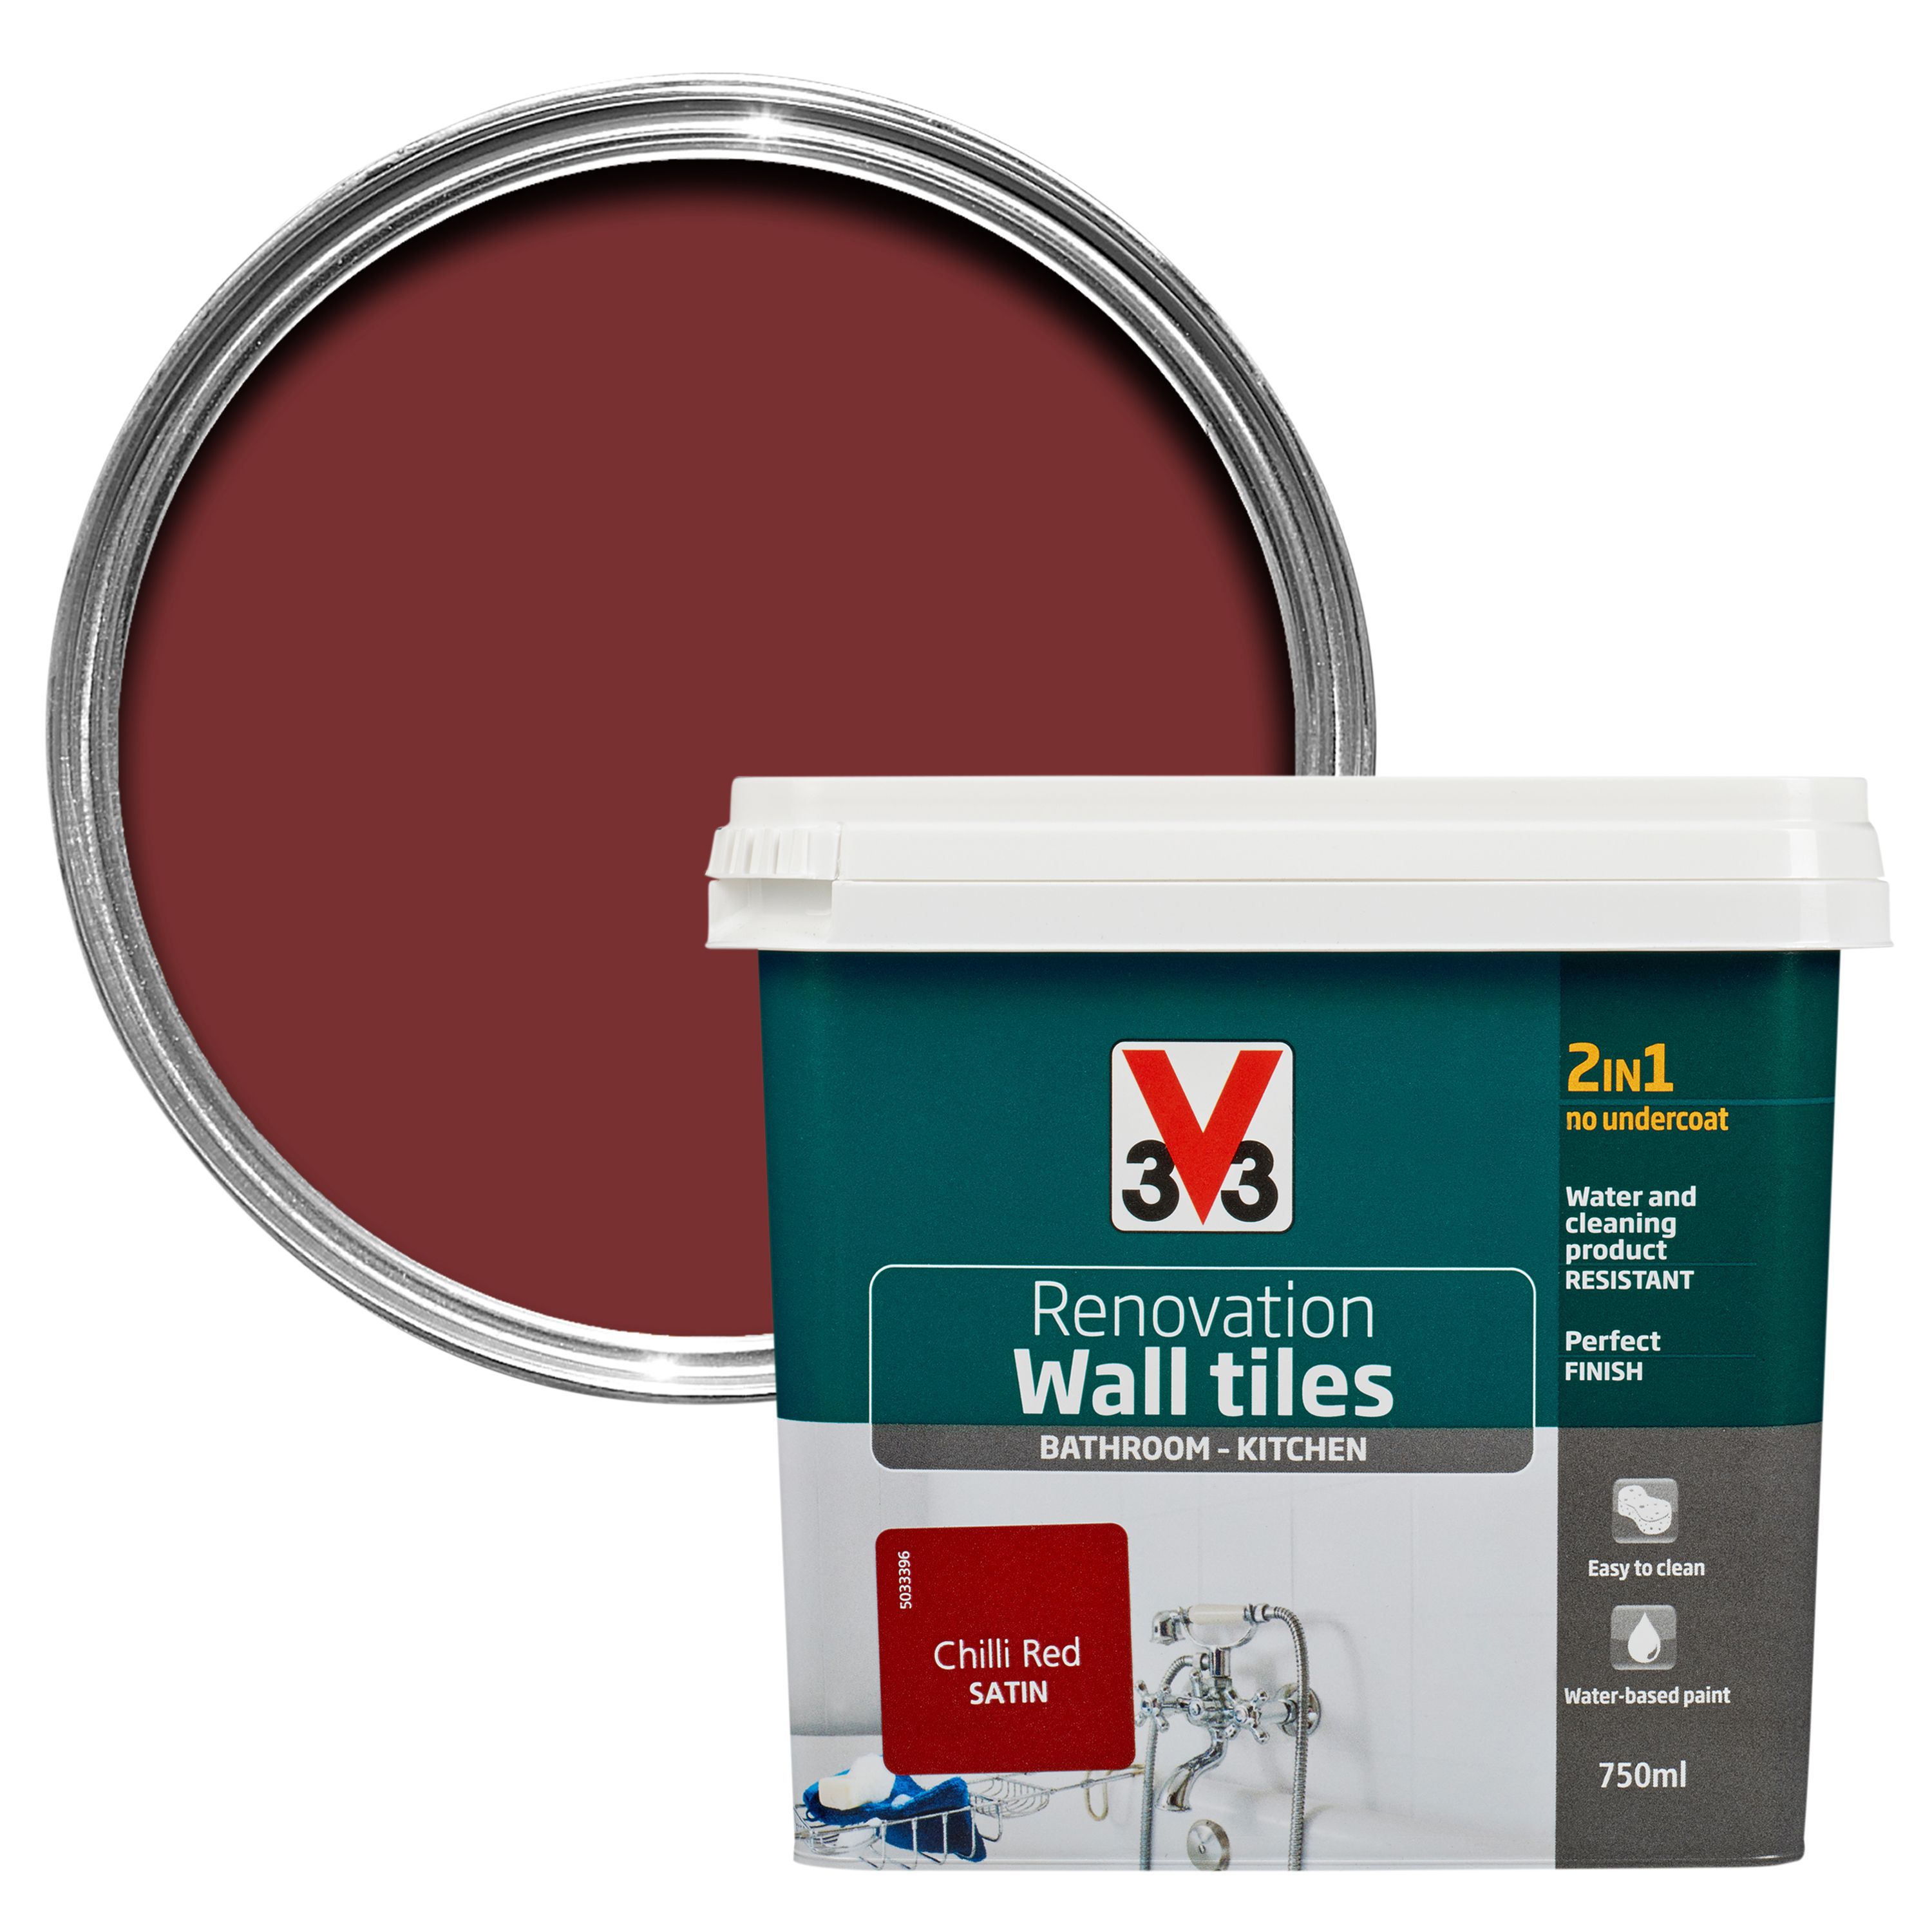 V33 Renovation Chilli Red Satin Wall Tile Paint 0.75L